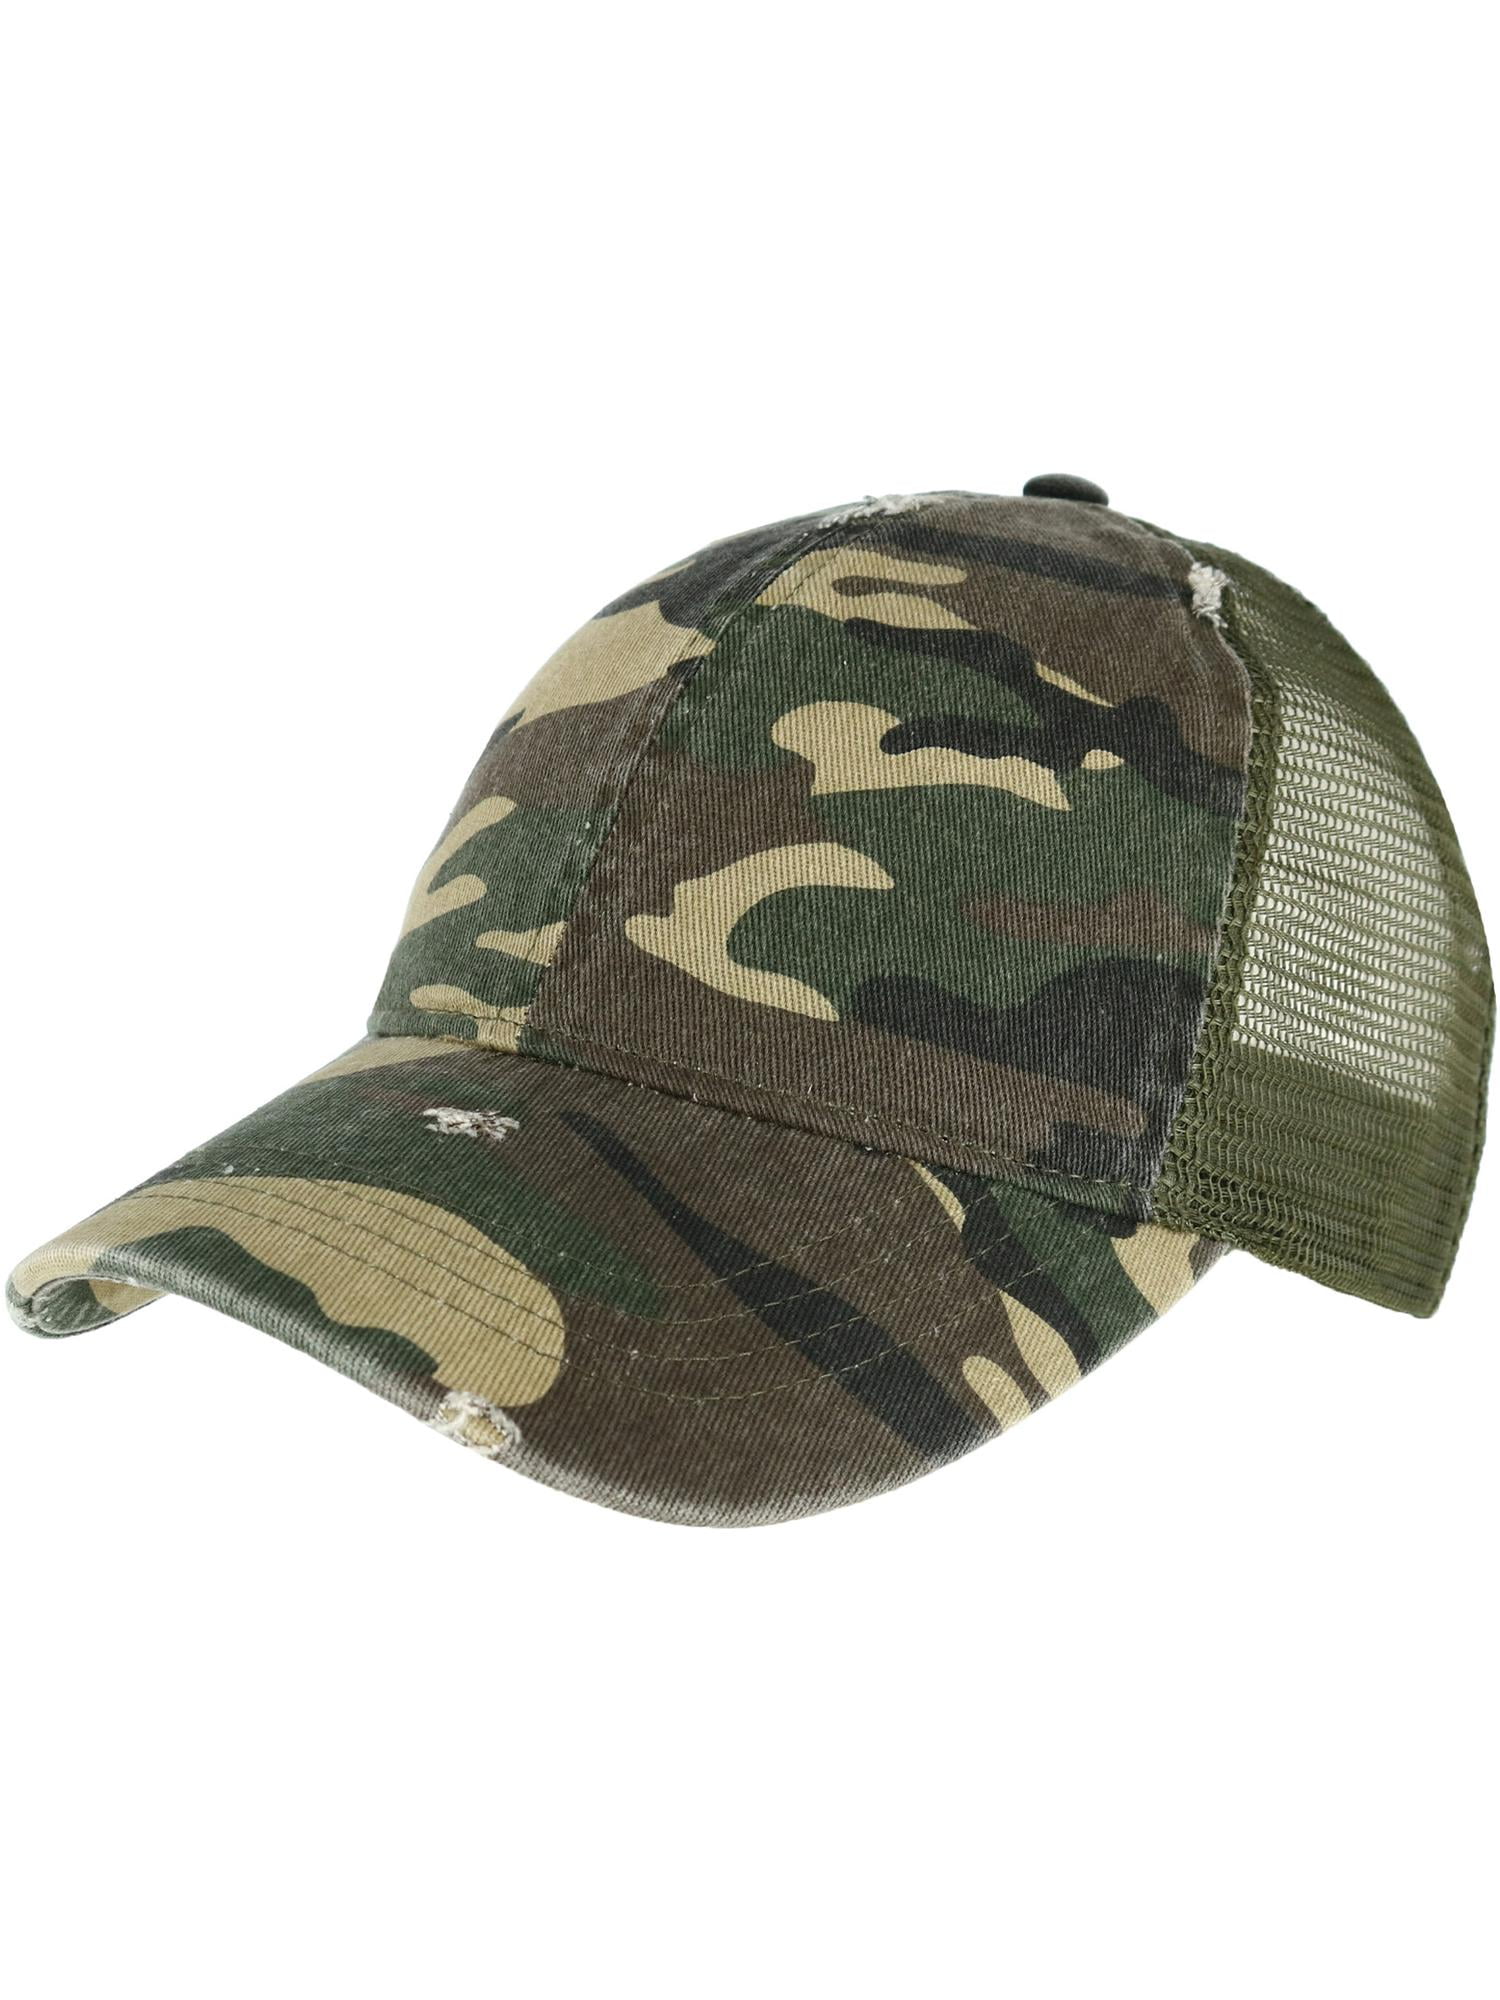 Women Men Sun Protection Hats Camouflage Pattern Outdoor Baseball Caps Soft Sunshade Hat